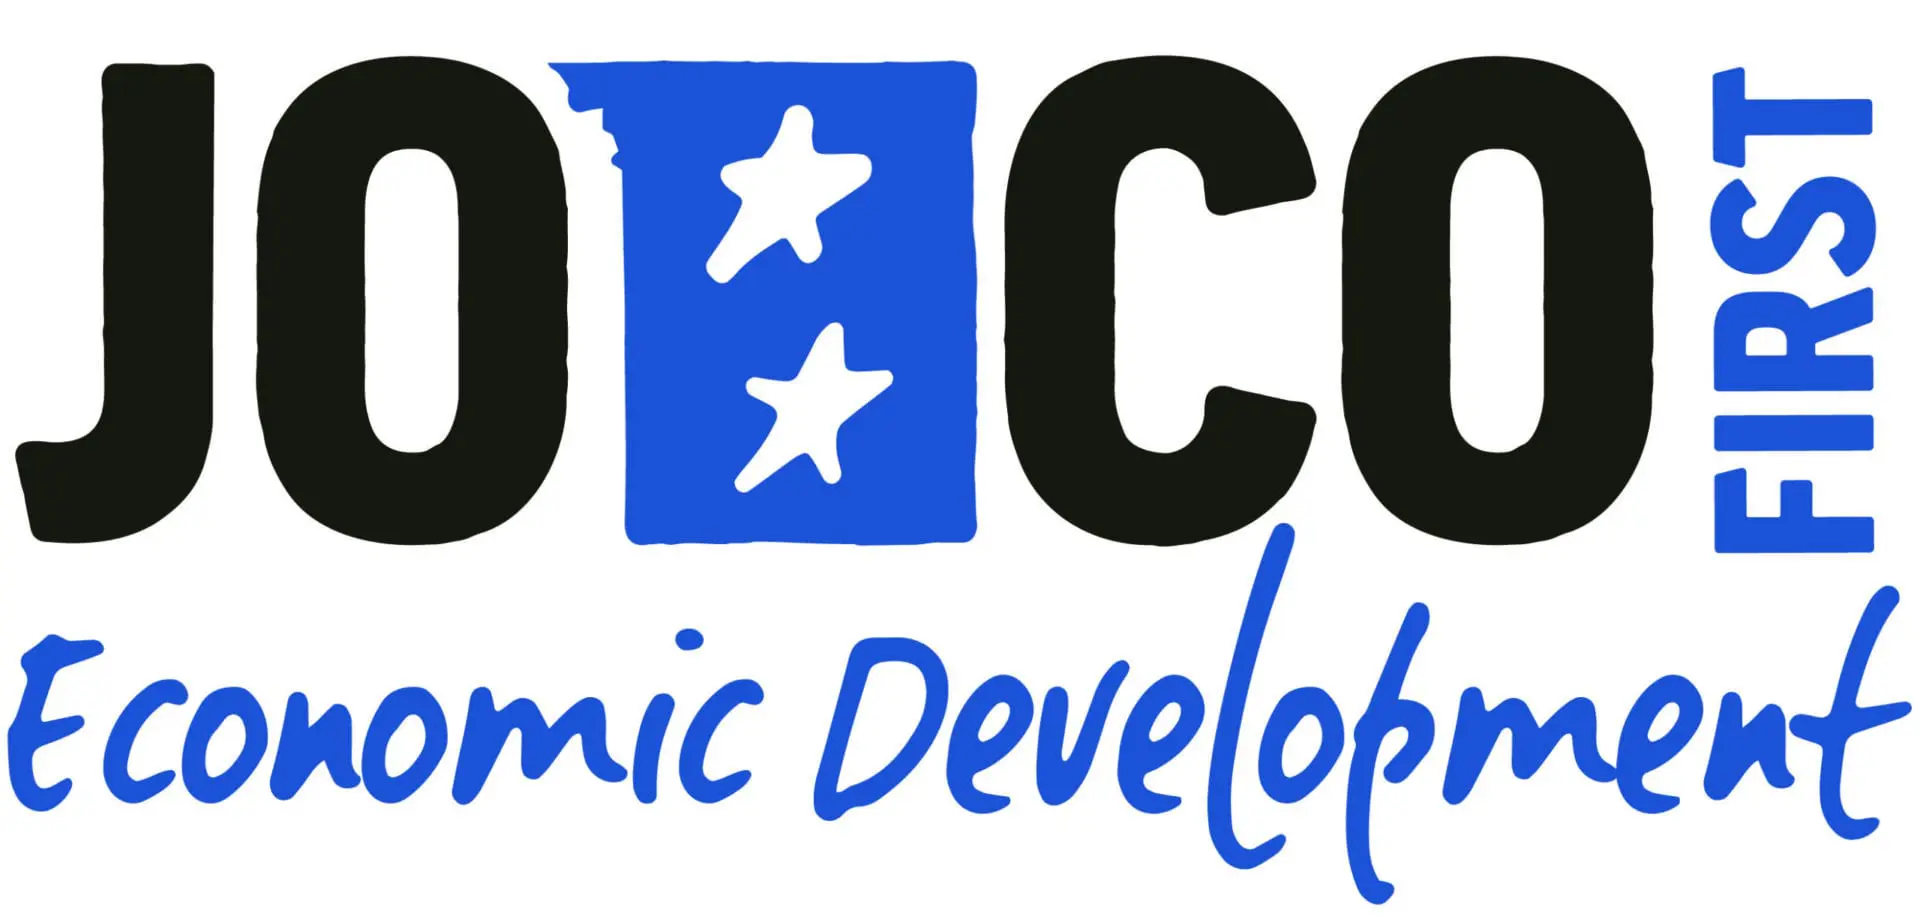 Jo Co Economic Development Logo One